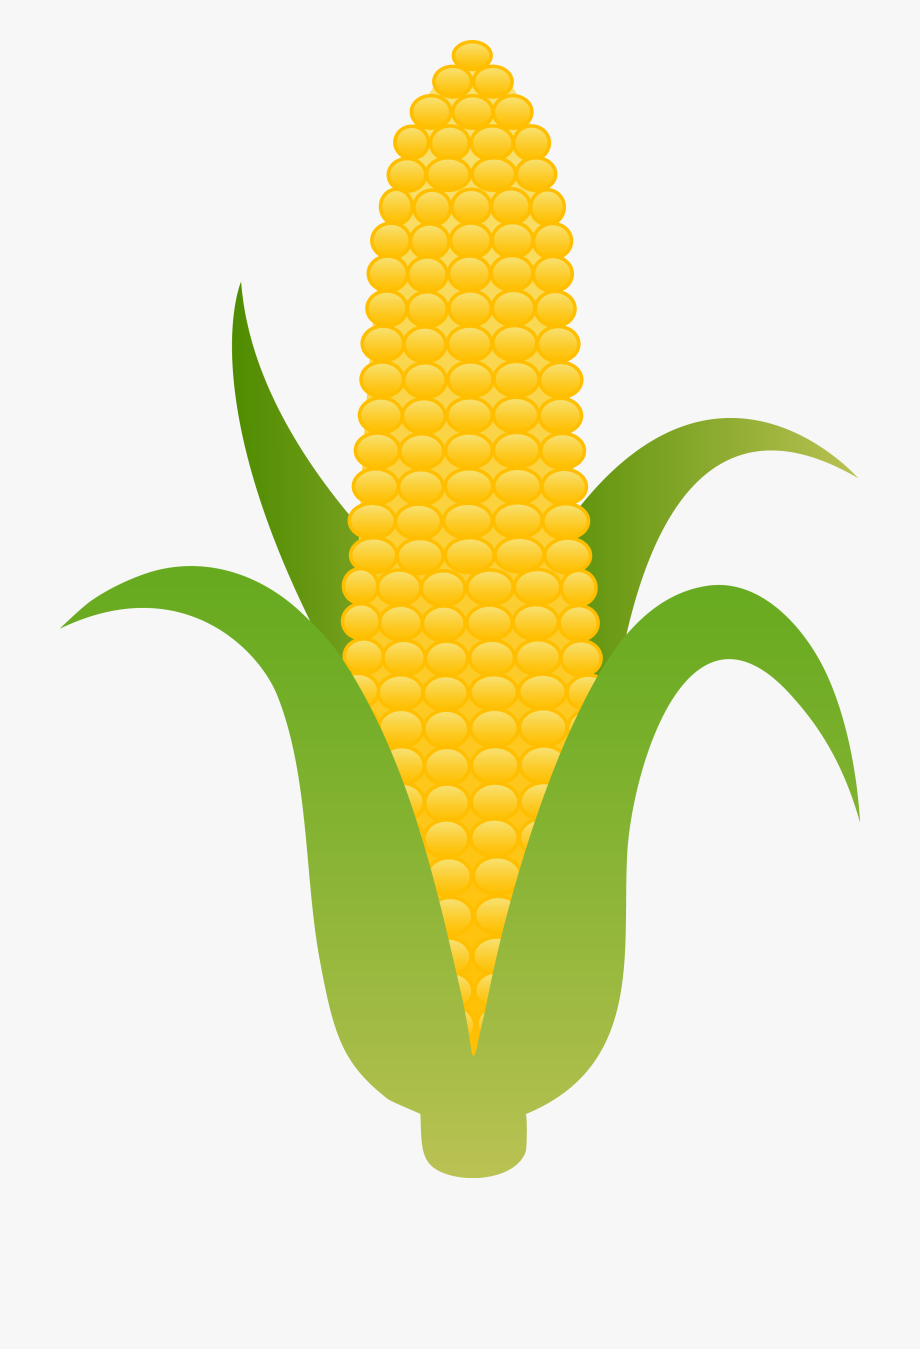 Corn clipart aztec, Corn aztec Transparent FREE for download on ...